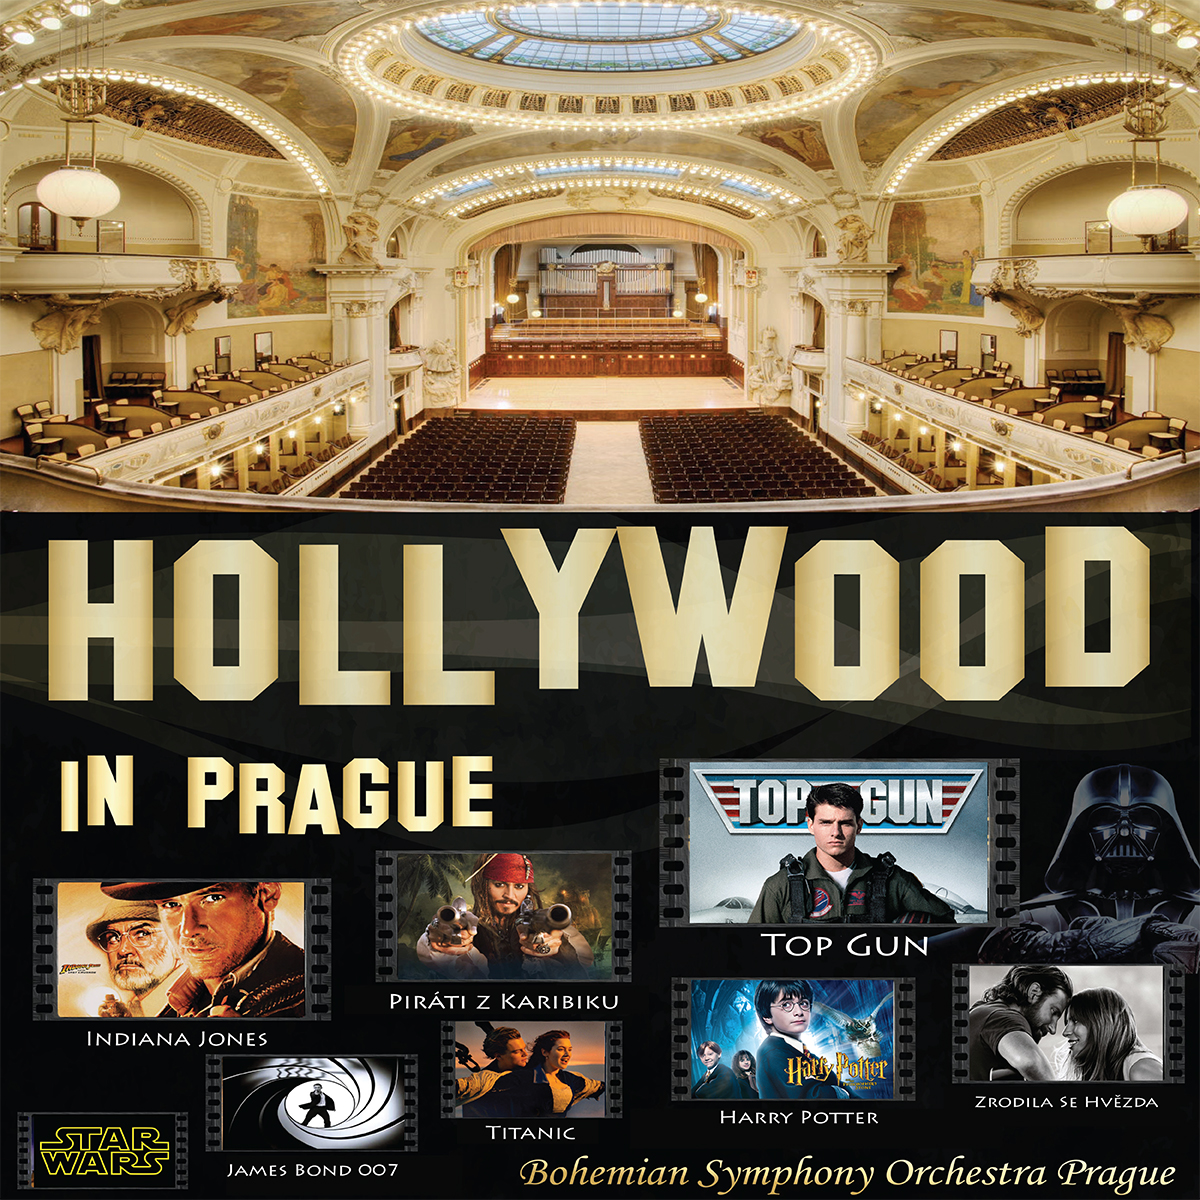 Hollywood in Prague: Noc filmových melodií